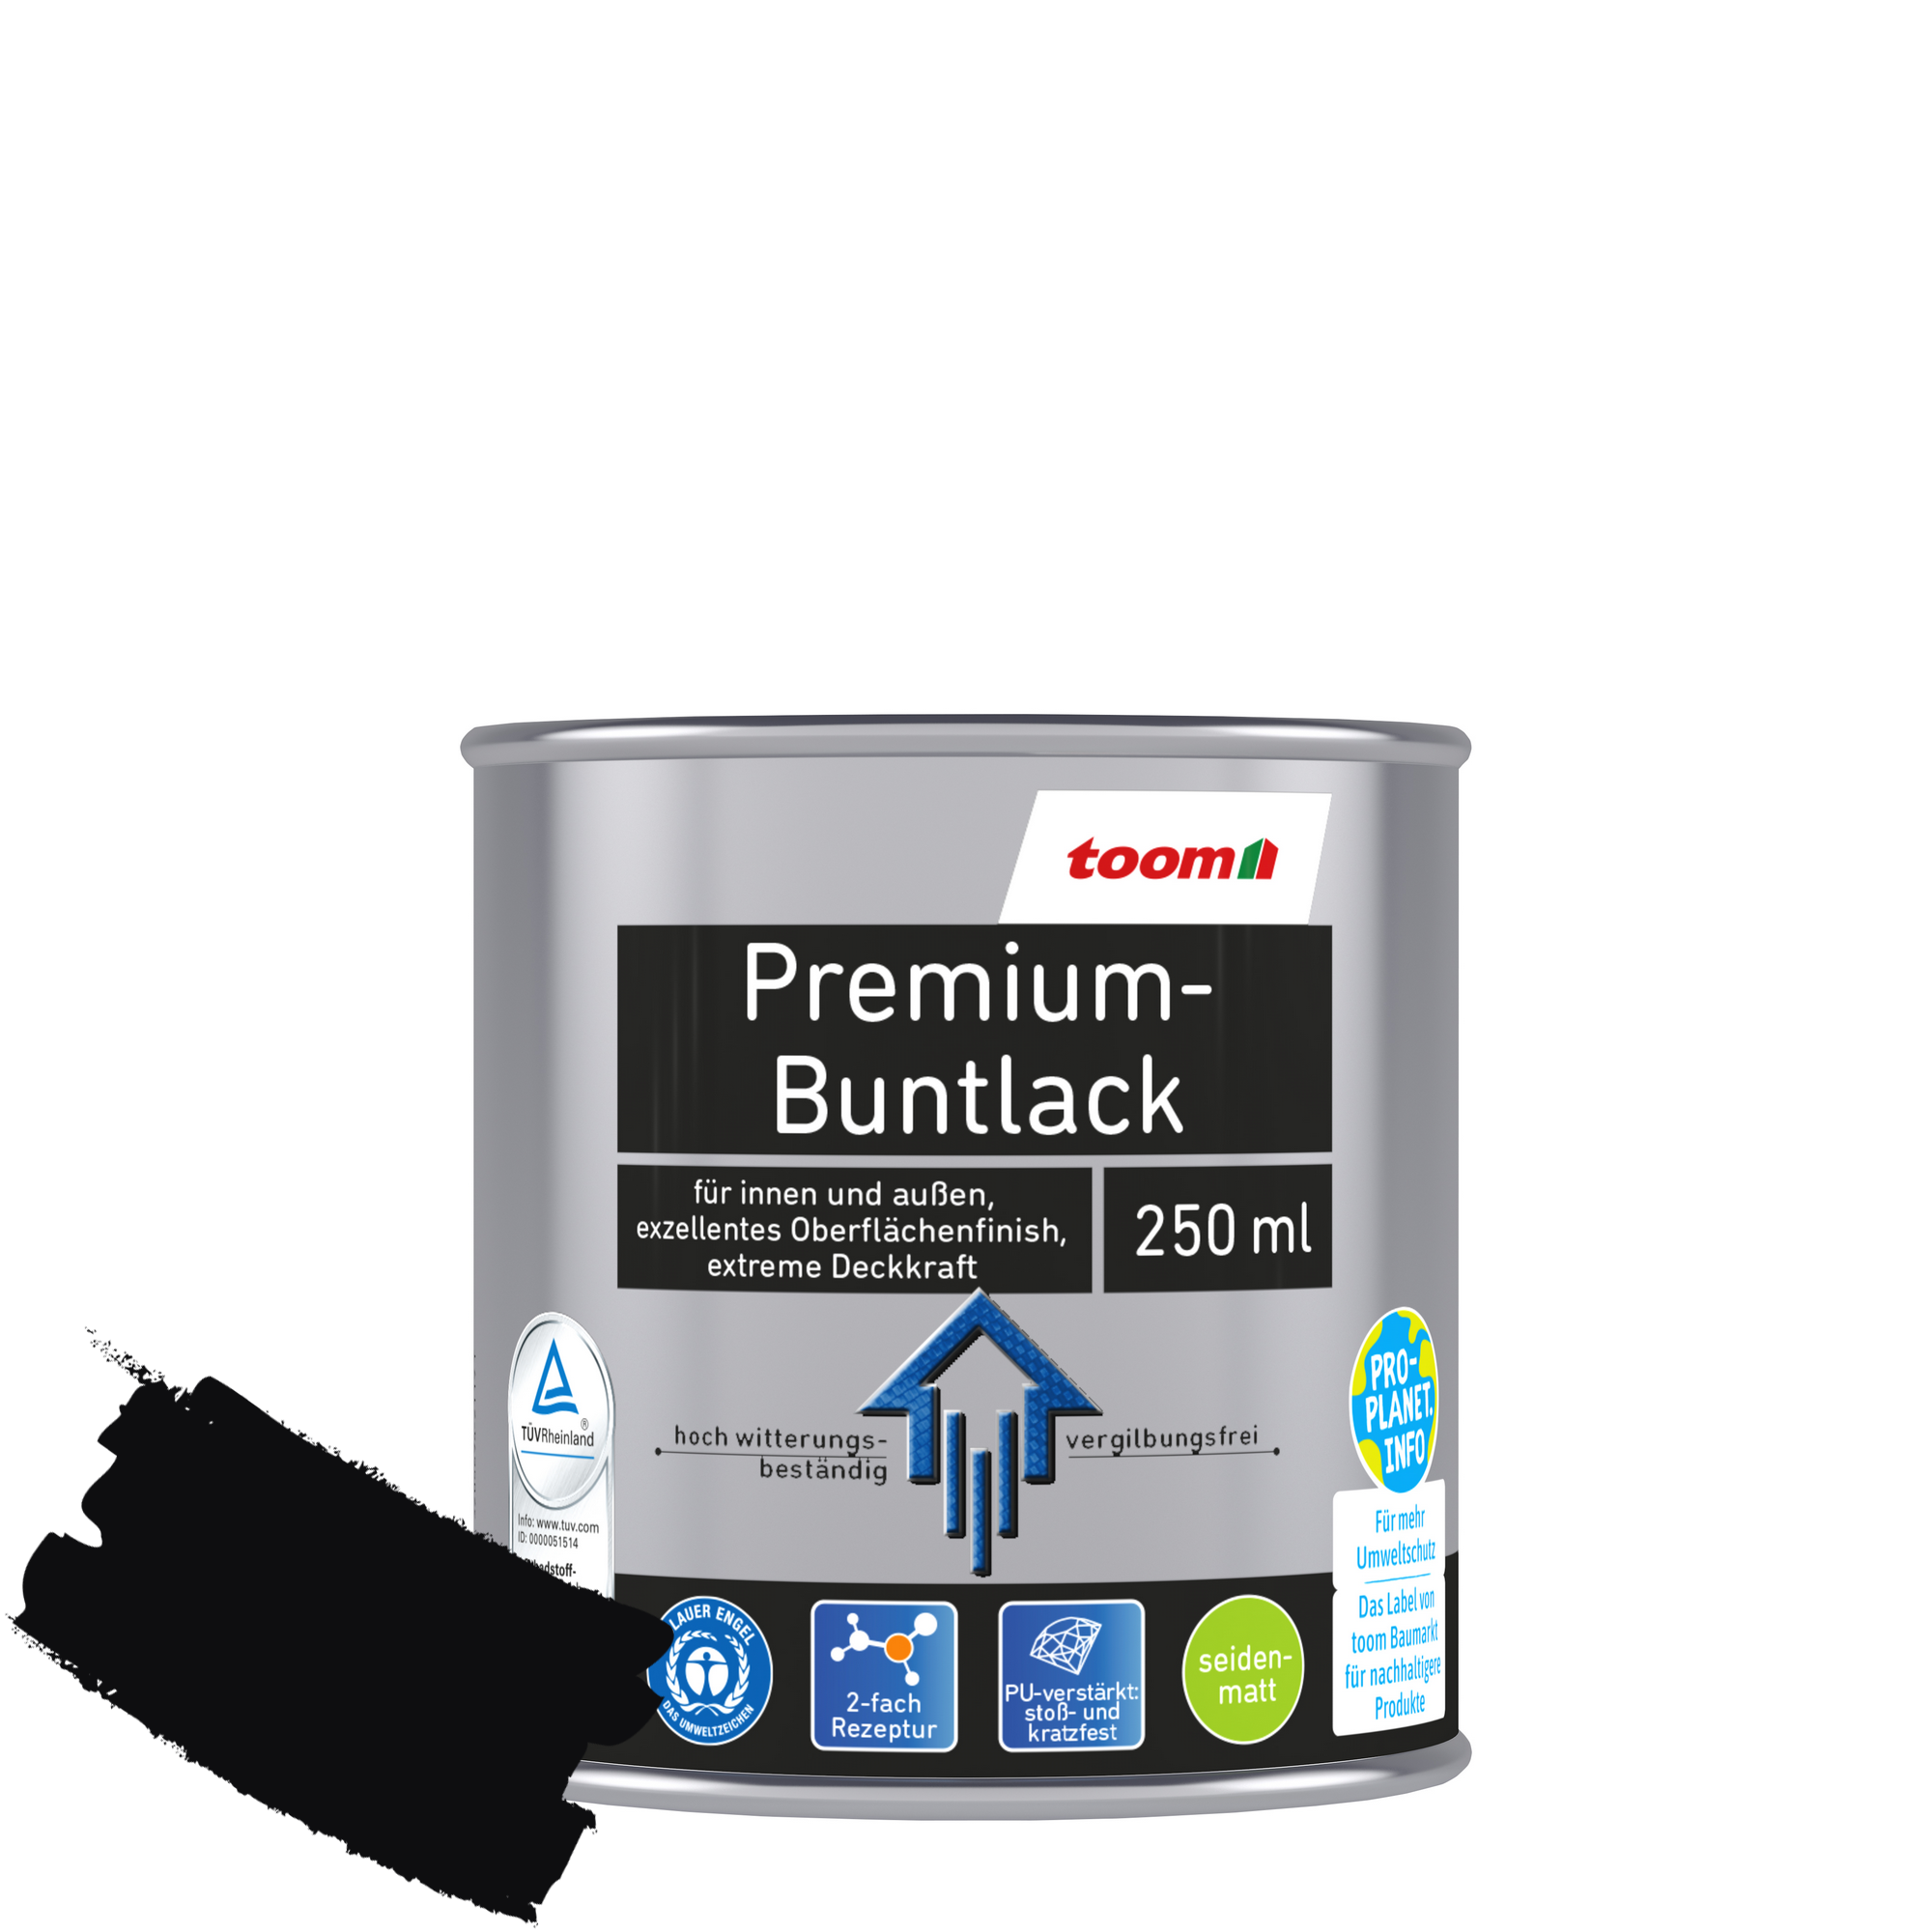 Premium-Buntlack tiefschwarz seidenmatt 250 ml + product picture